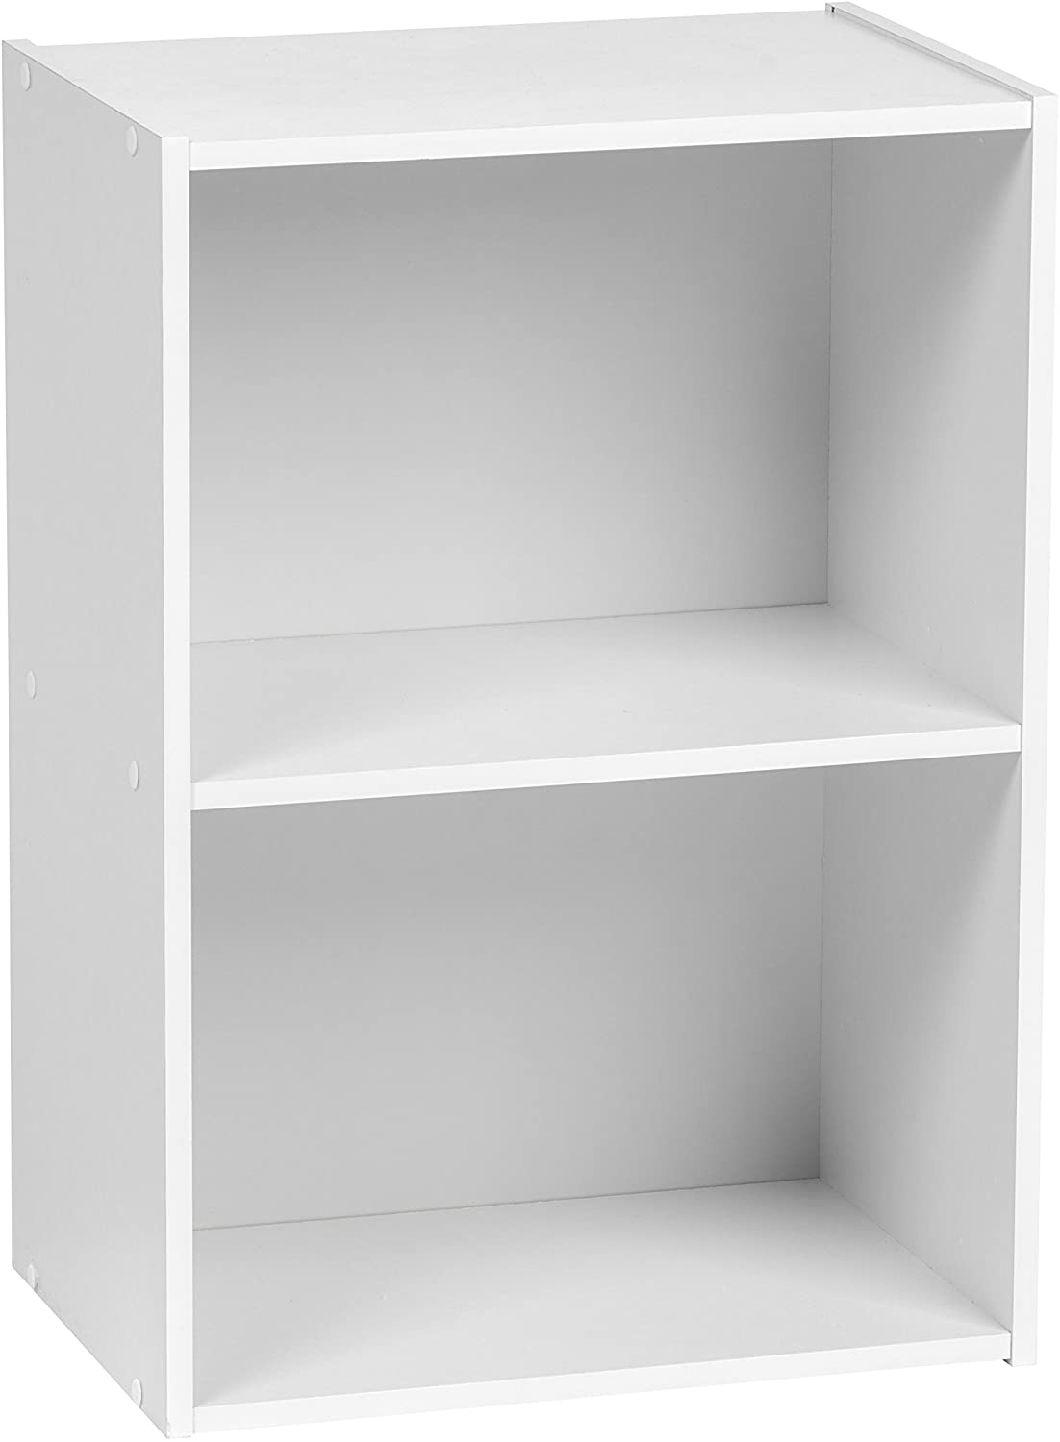 High Quality Bookshelf Bookcase Storage Shelf for Home Office Living Room